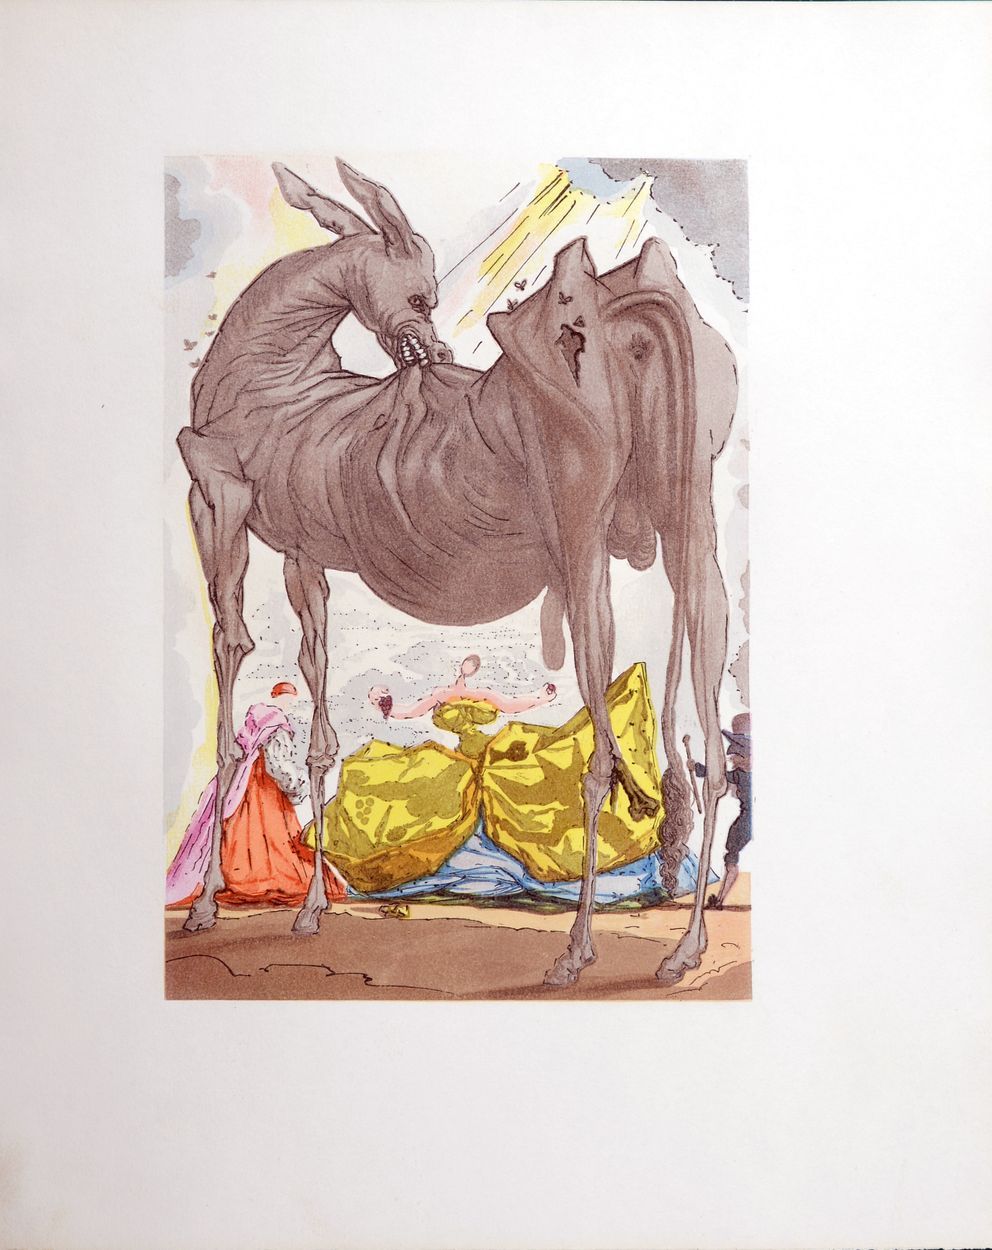 Salvador DALI Salvador DALI

Tricorn》，1958年

纬线纸上的彩色木刻原作，范-盖尔德-佐宁

摘自萨尔瓦多-达利的作品集&hellip;